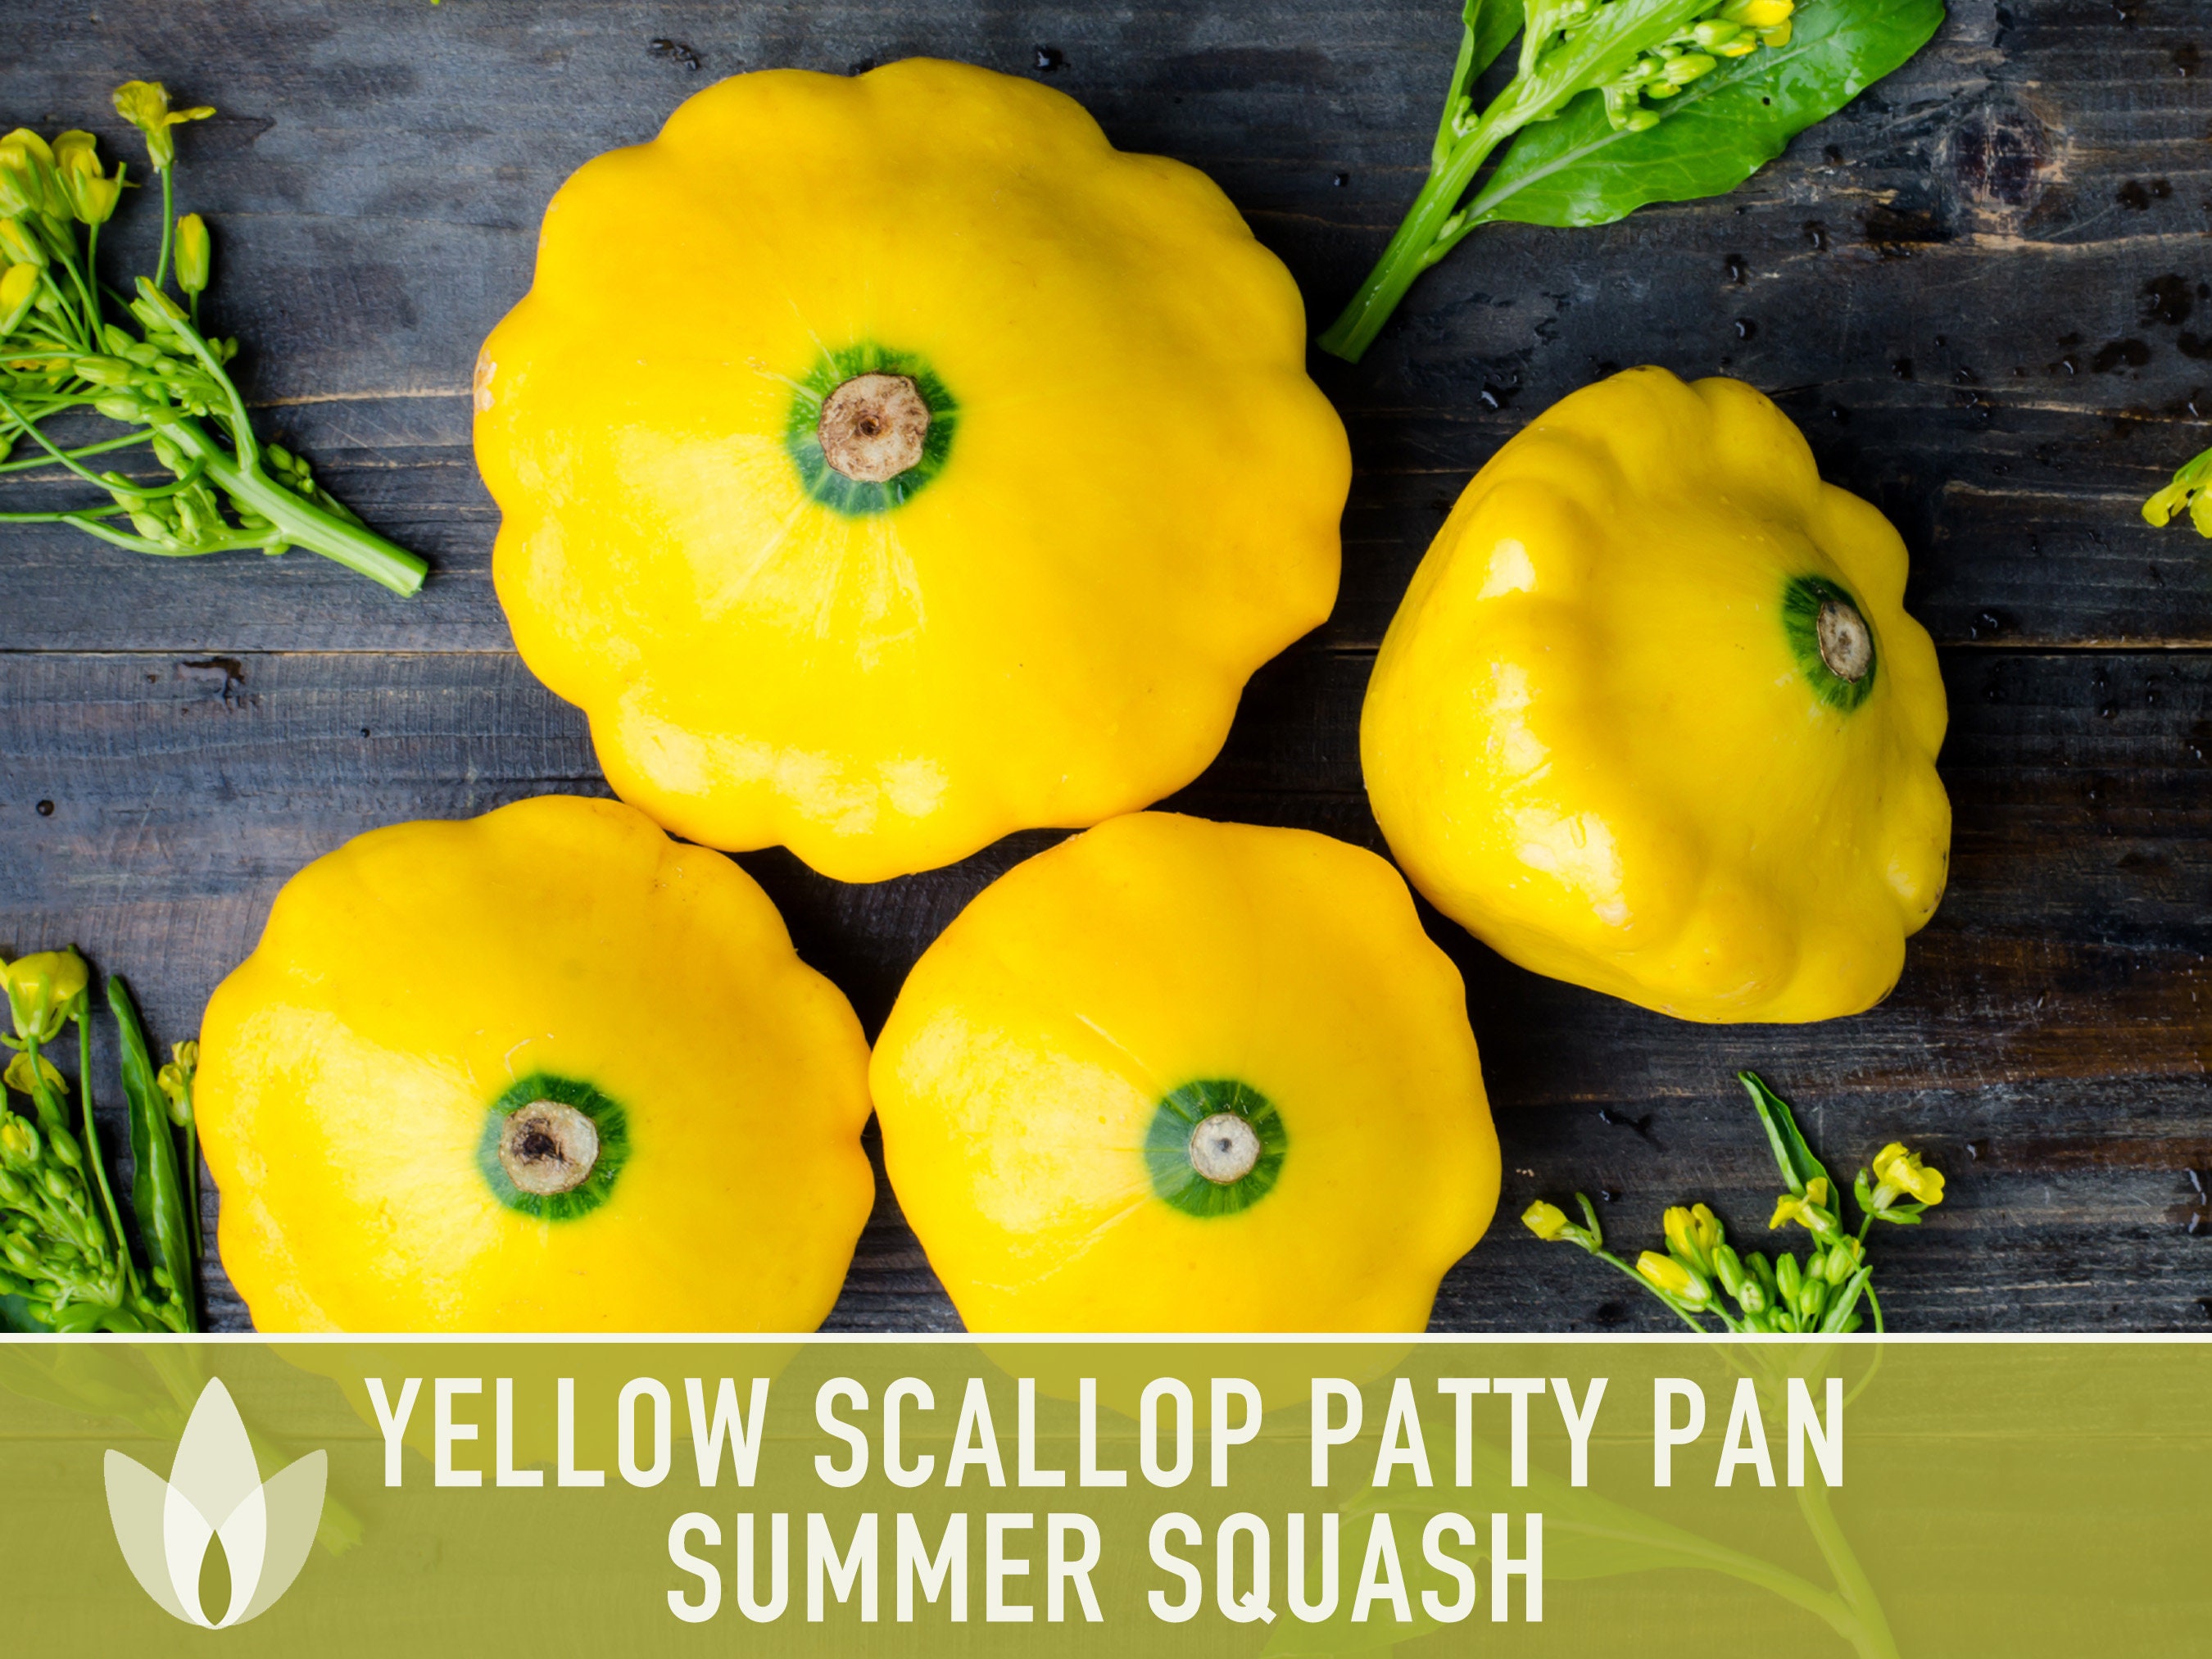 Yellow Scallop Patty Pan Bush Summer Squash Heirloom Seeds